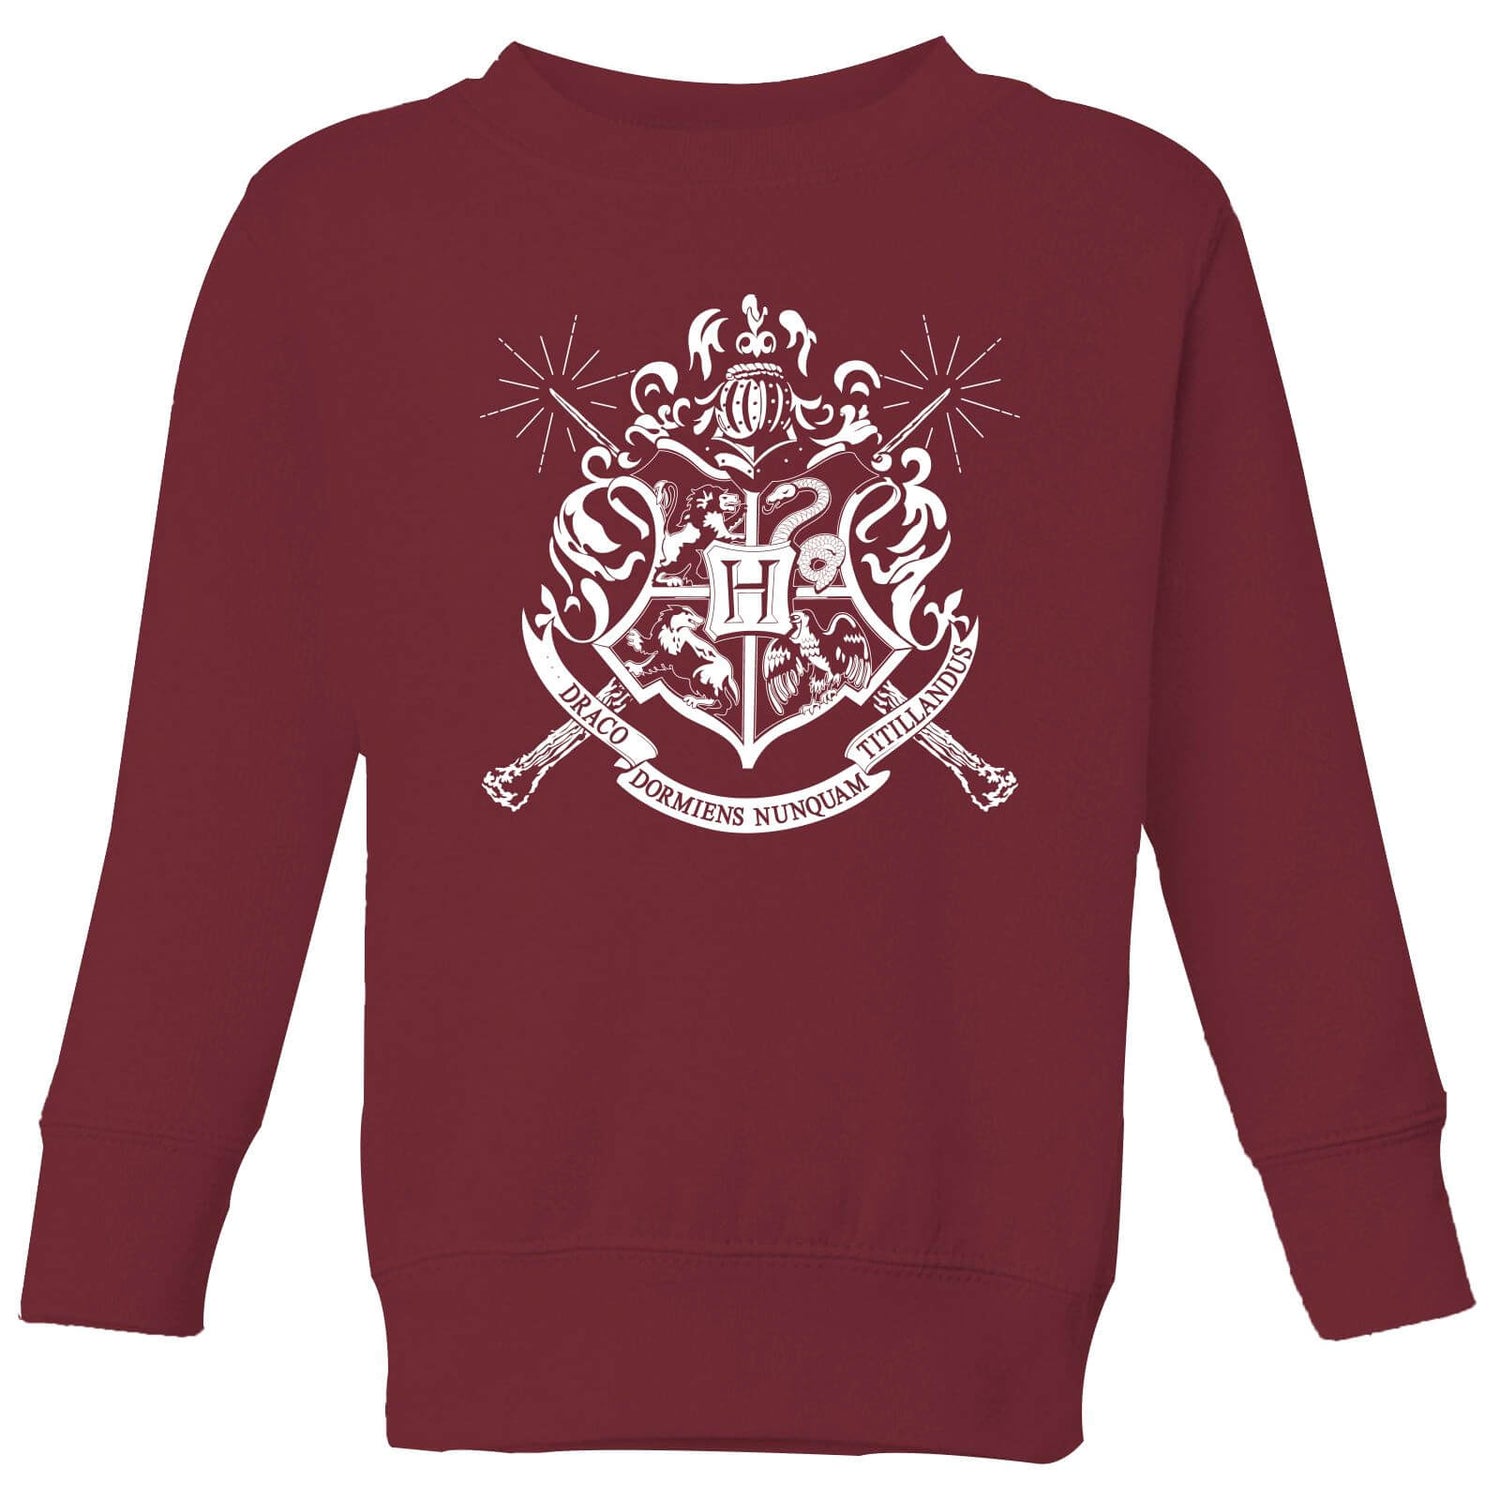 Harry Potter Hogwarts House Crest Kids' Sweatshirt - Burgundy